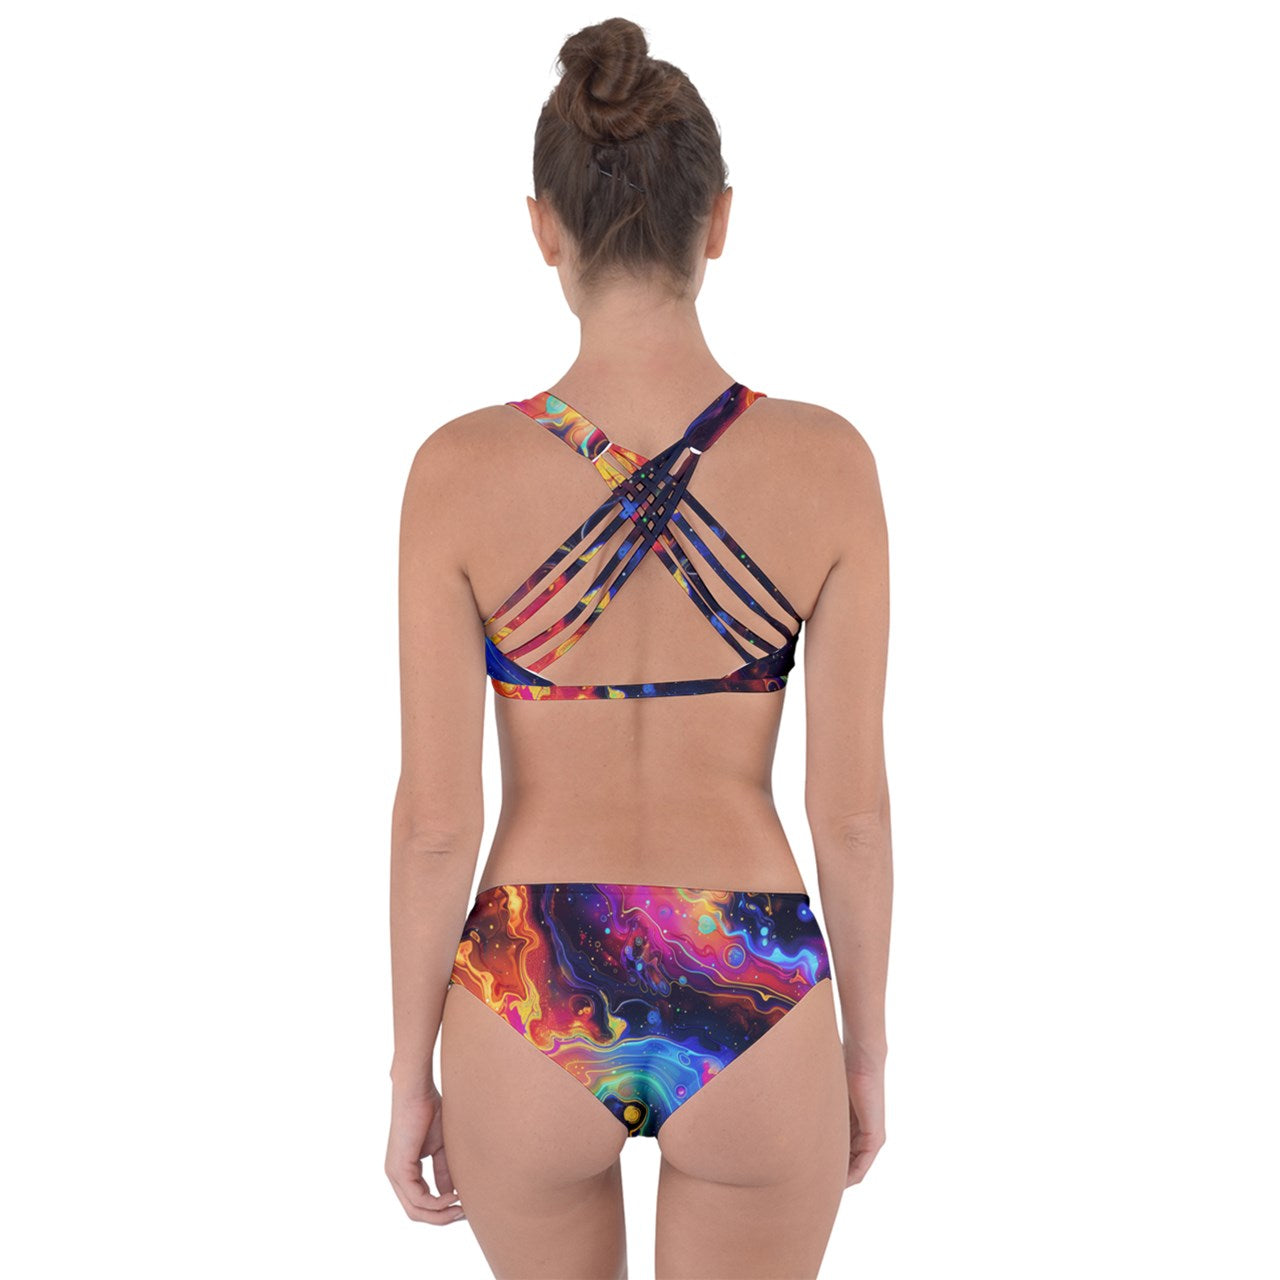 Cosmic Kaleidoscope Criss Cross Bikini Set